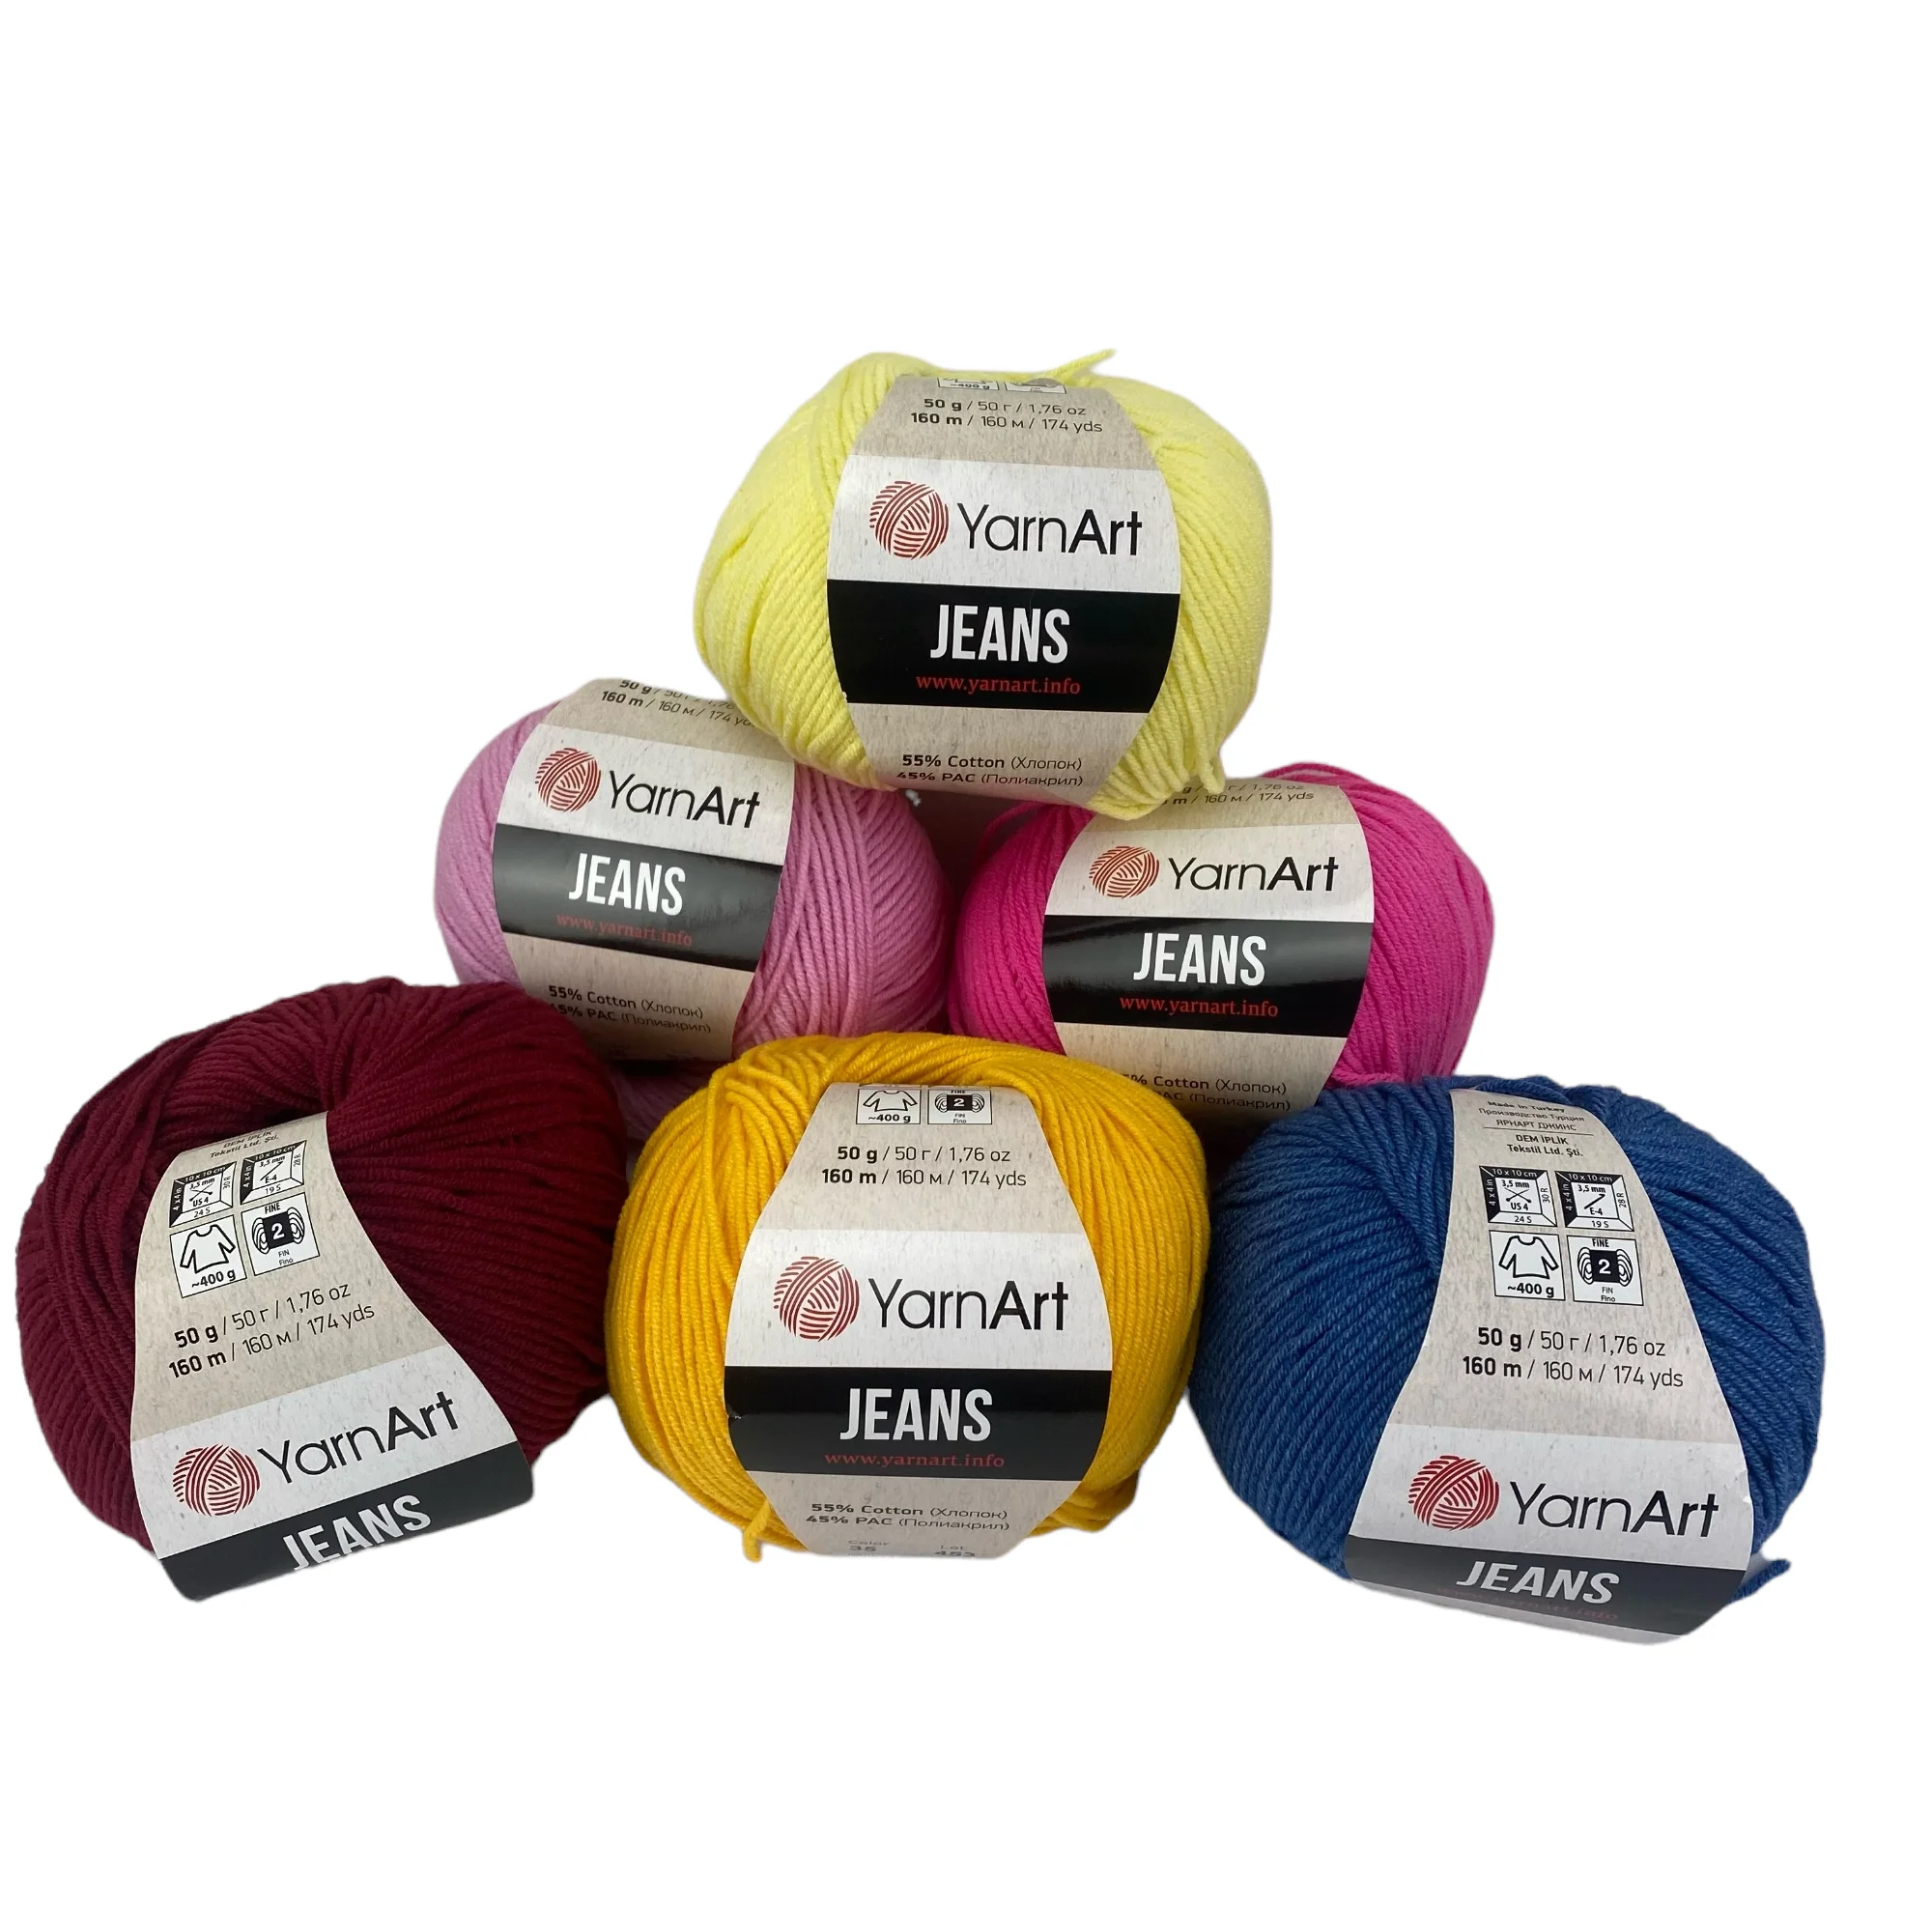 Yarnart Jeans Yarn %55 Cotton - %45 PolyAcr 50gr-160m Cardigan Sweater Shawl Blouse Home Textile Amigurumi Crochet Knitting